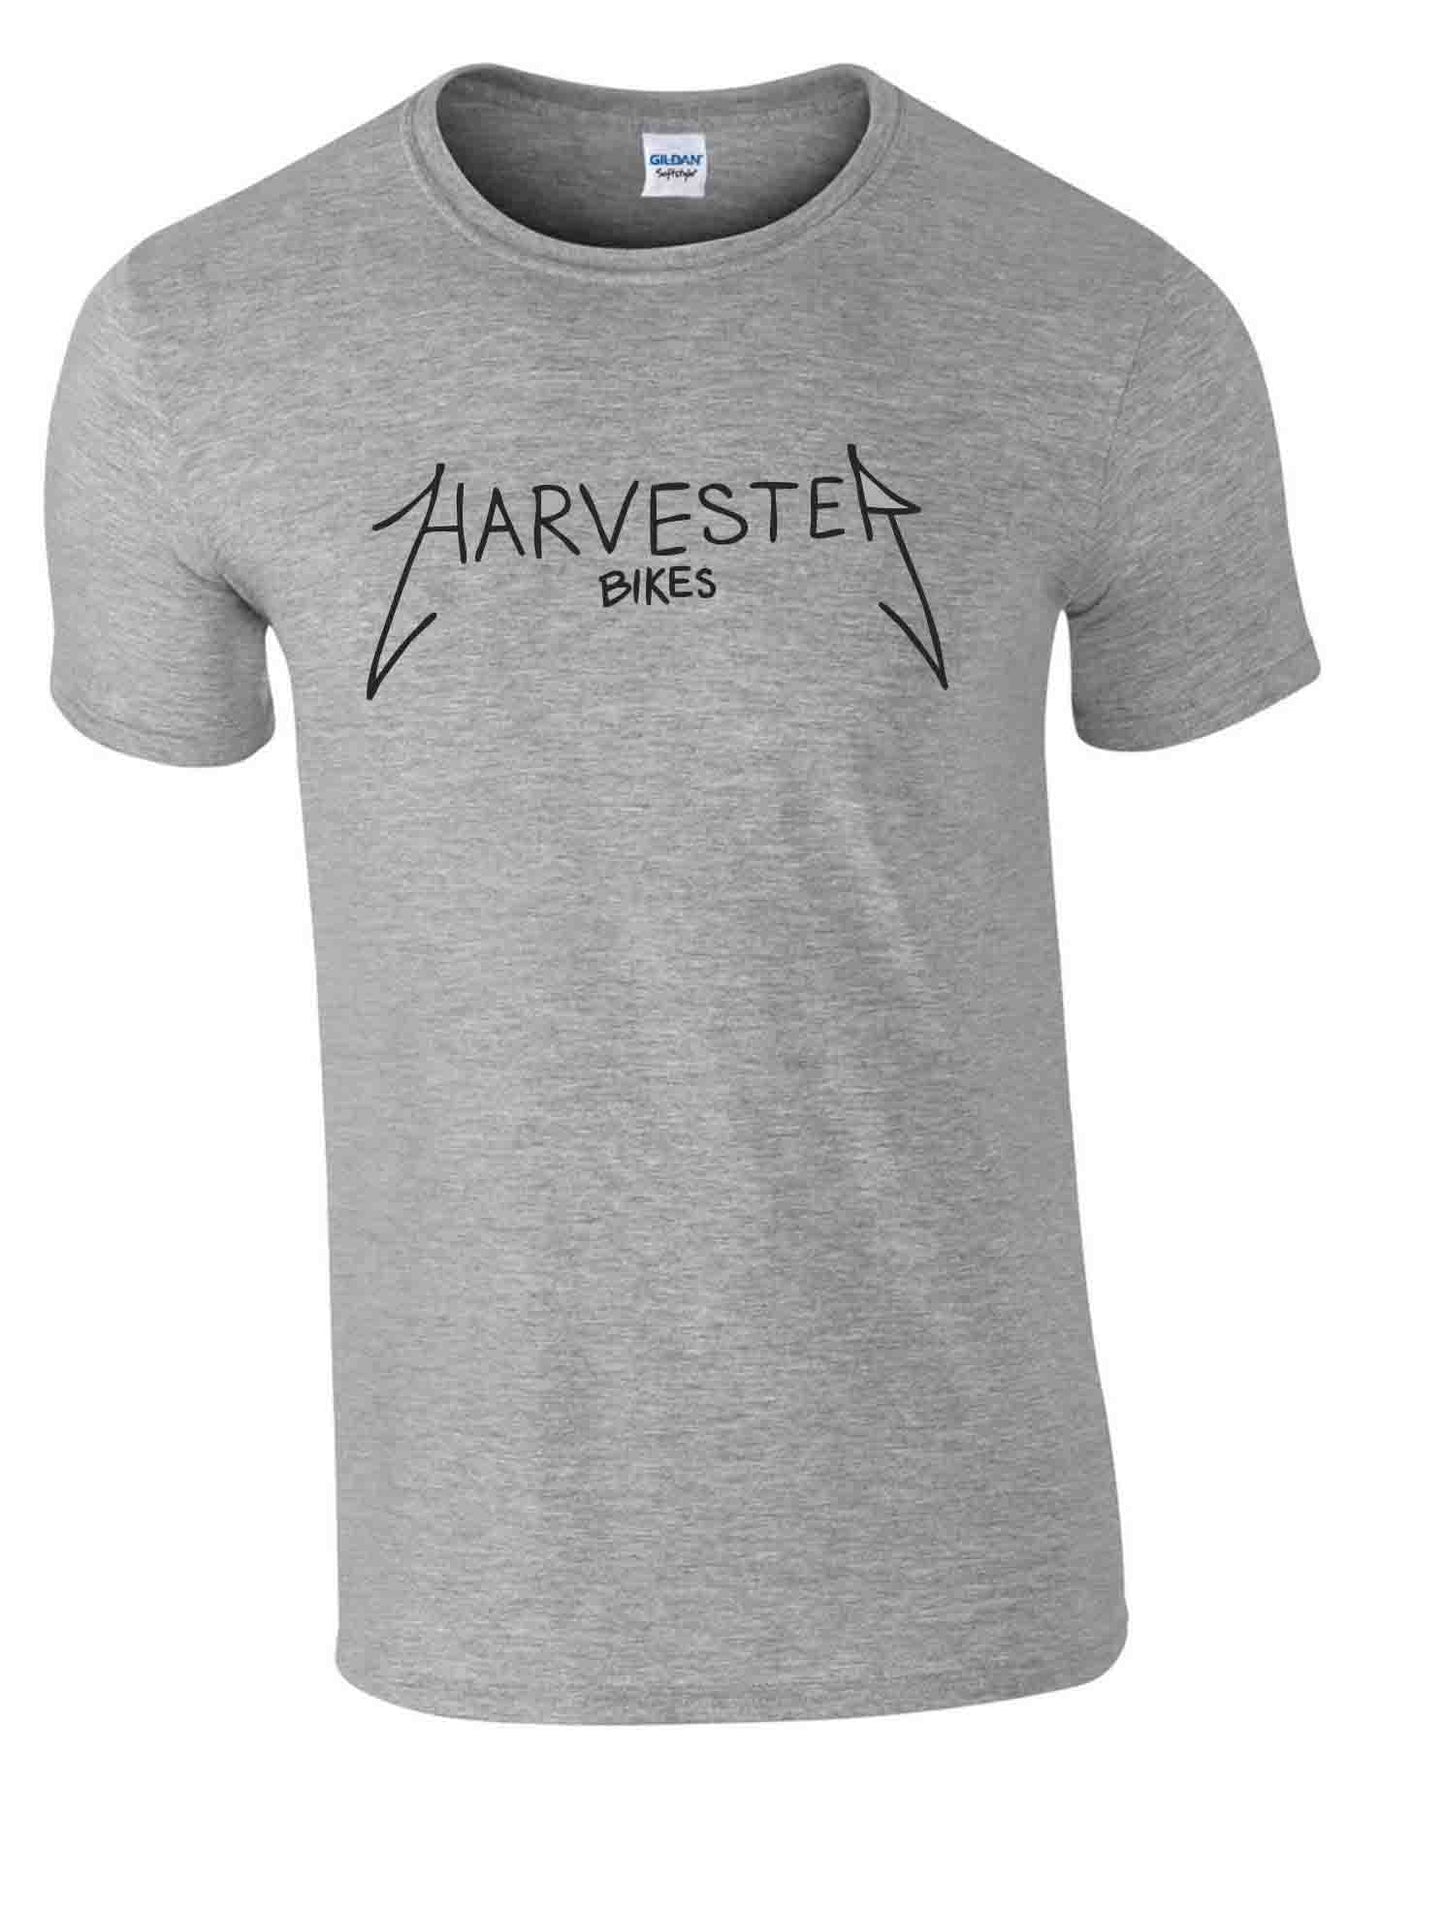 Harvester Bikes Tshirt